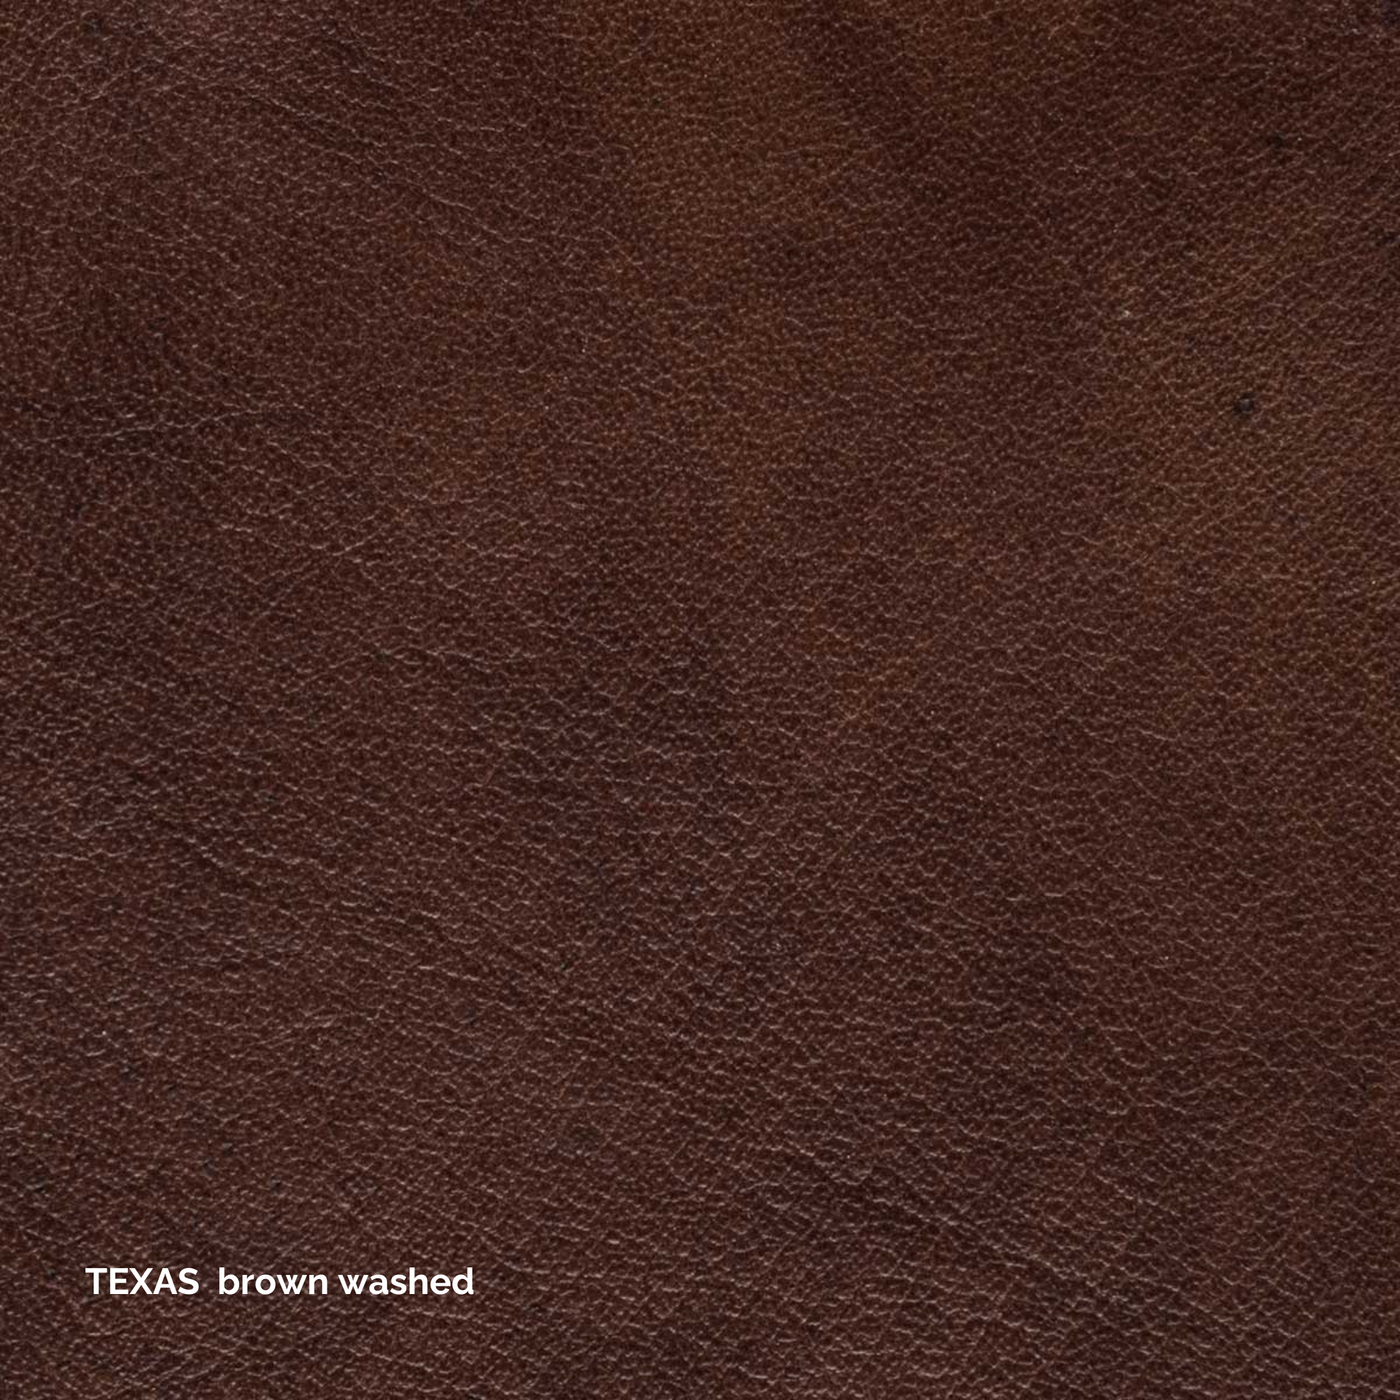 Olli - Stuhl mit Armlehne - Leder Texas Brown Washed